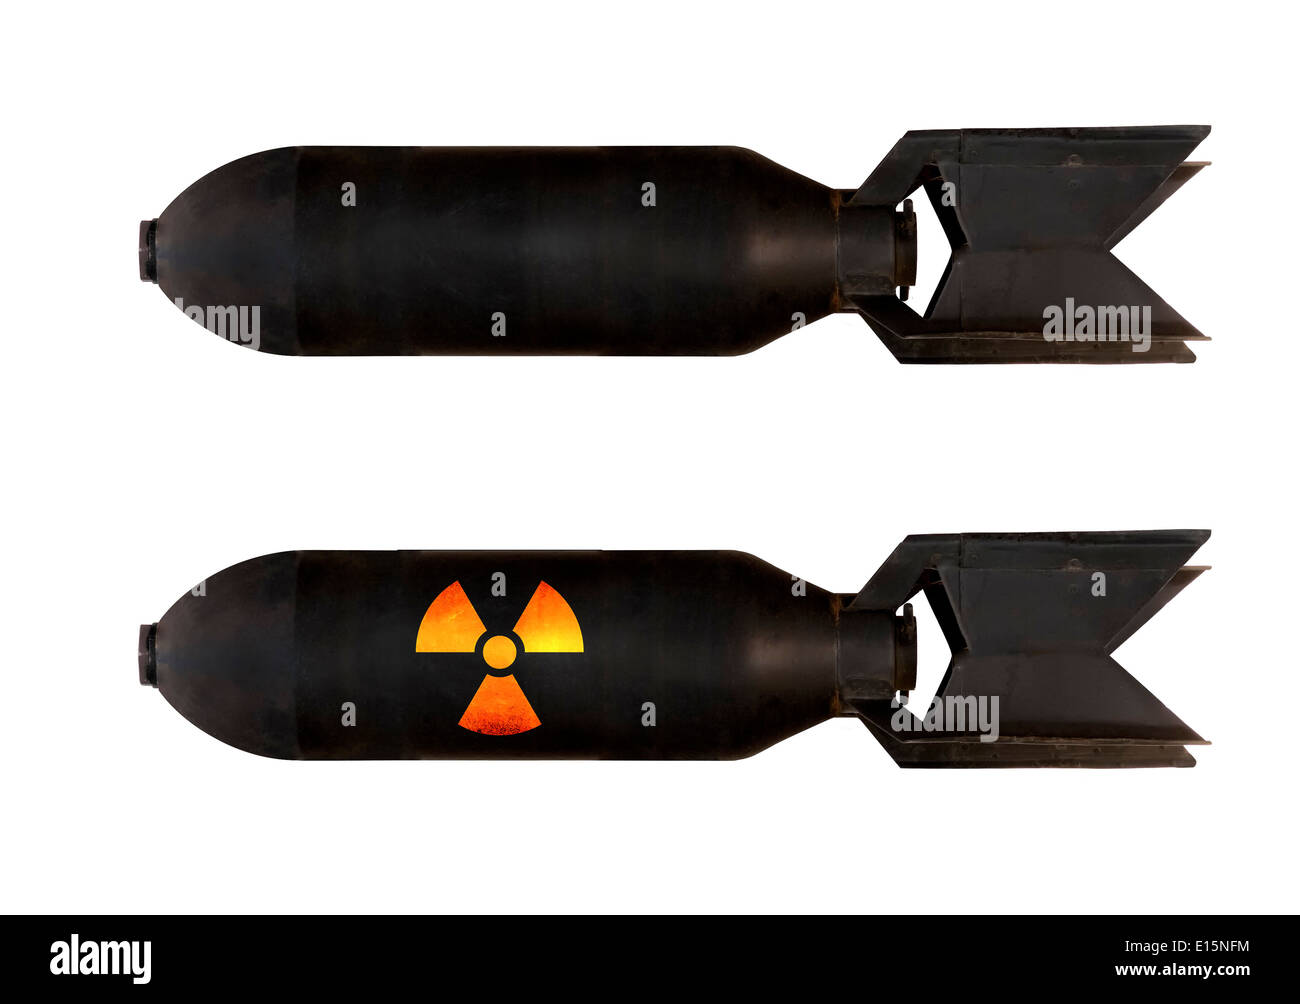 Bombs world war 2 era. with nuclear symbol. Stock Photo